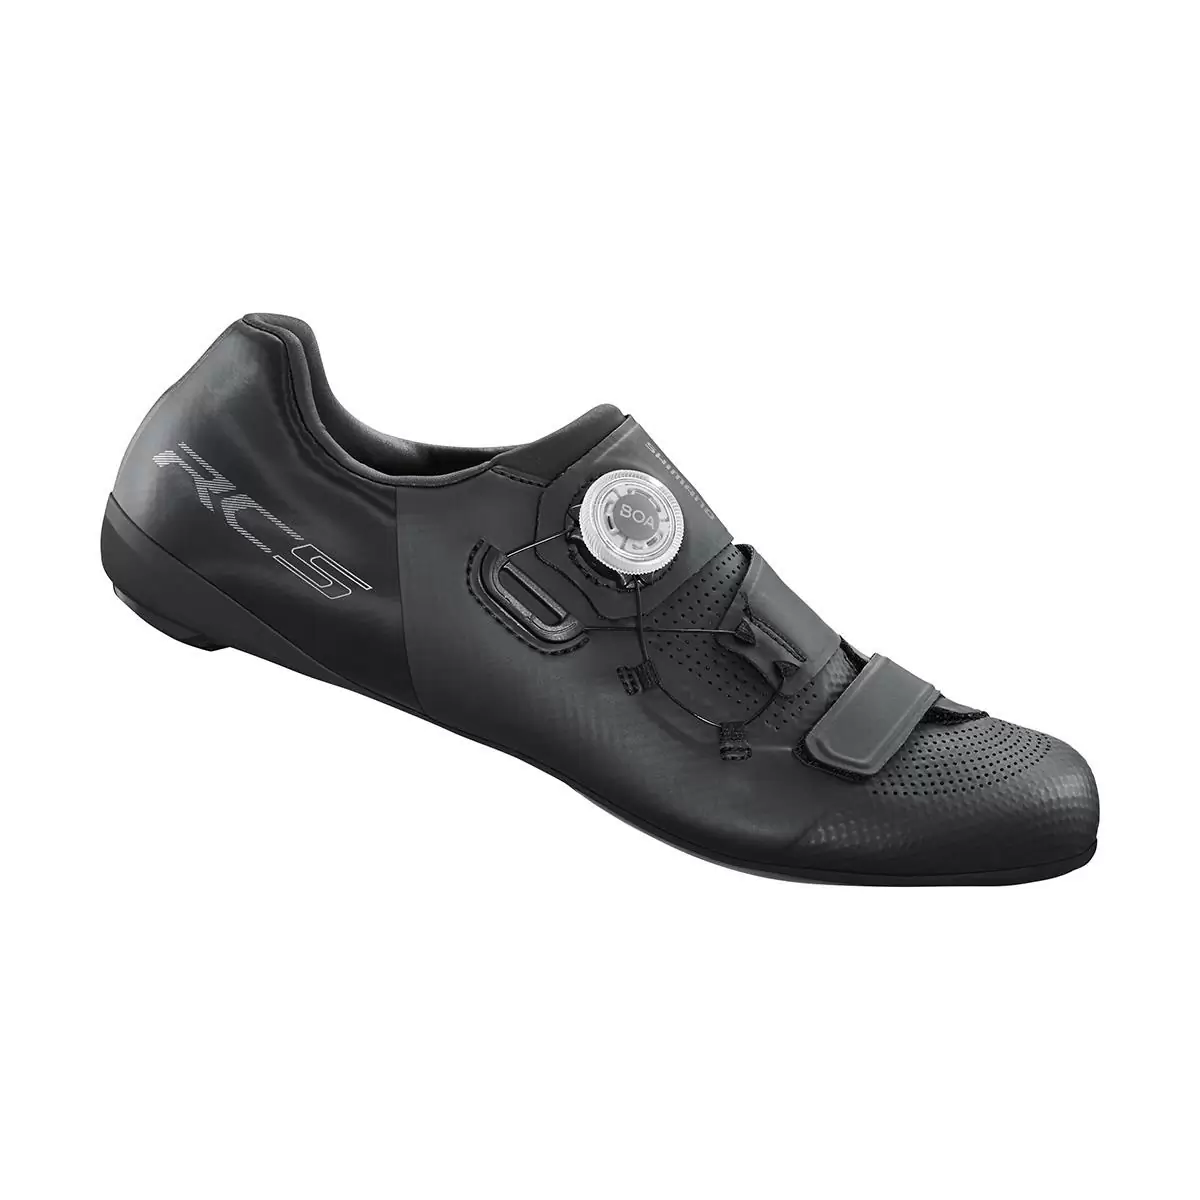 Road Shoes RC SH-RC502 Black Size 38 - image